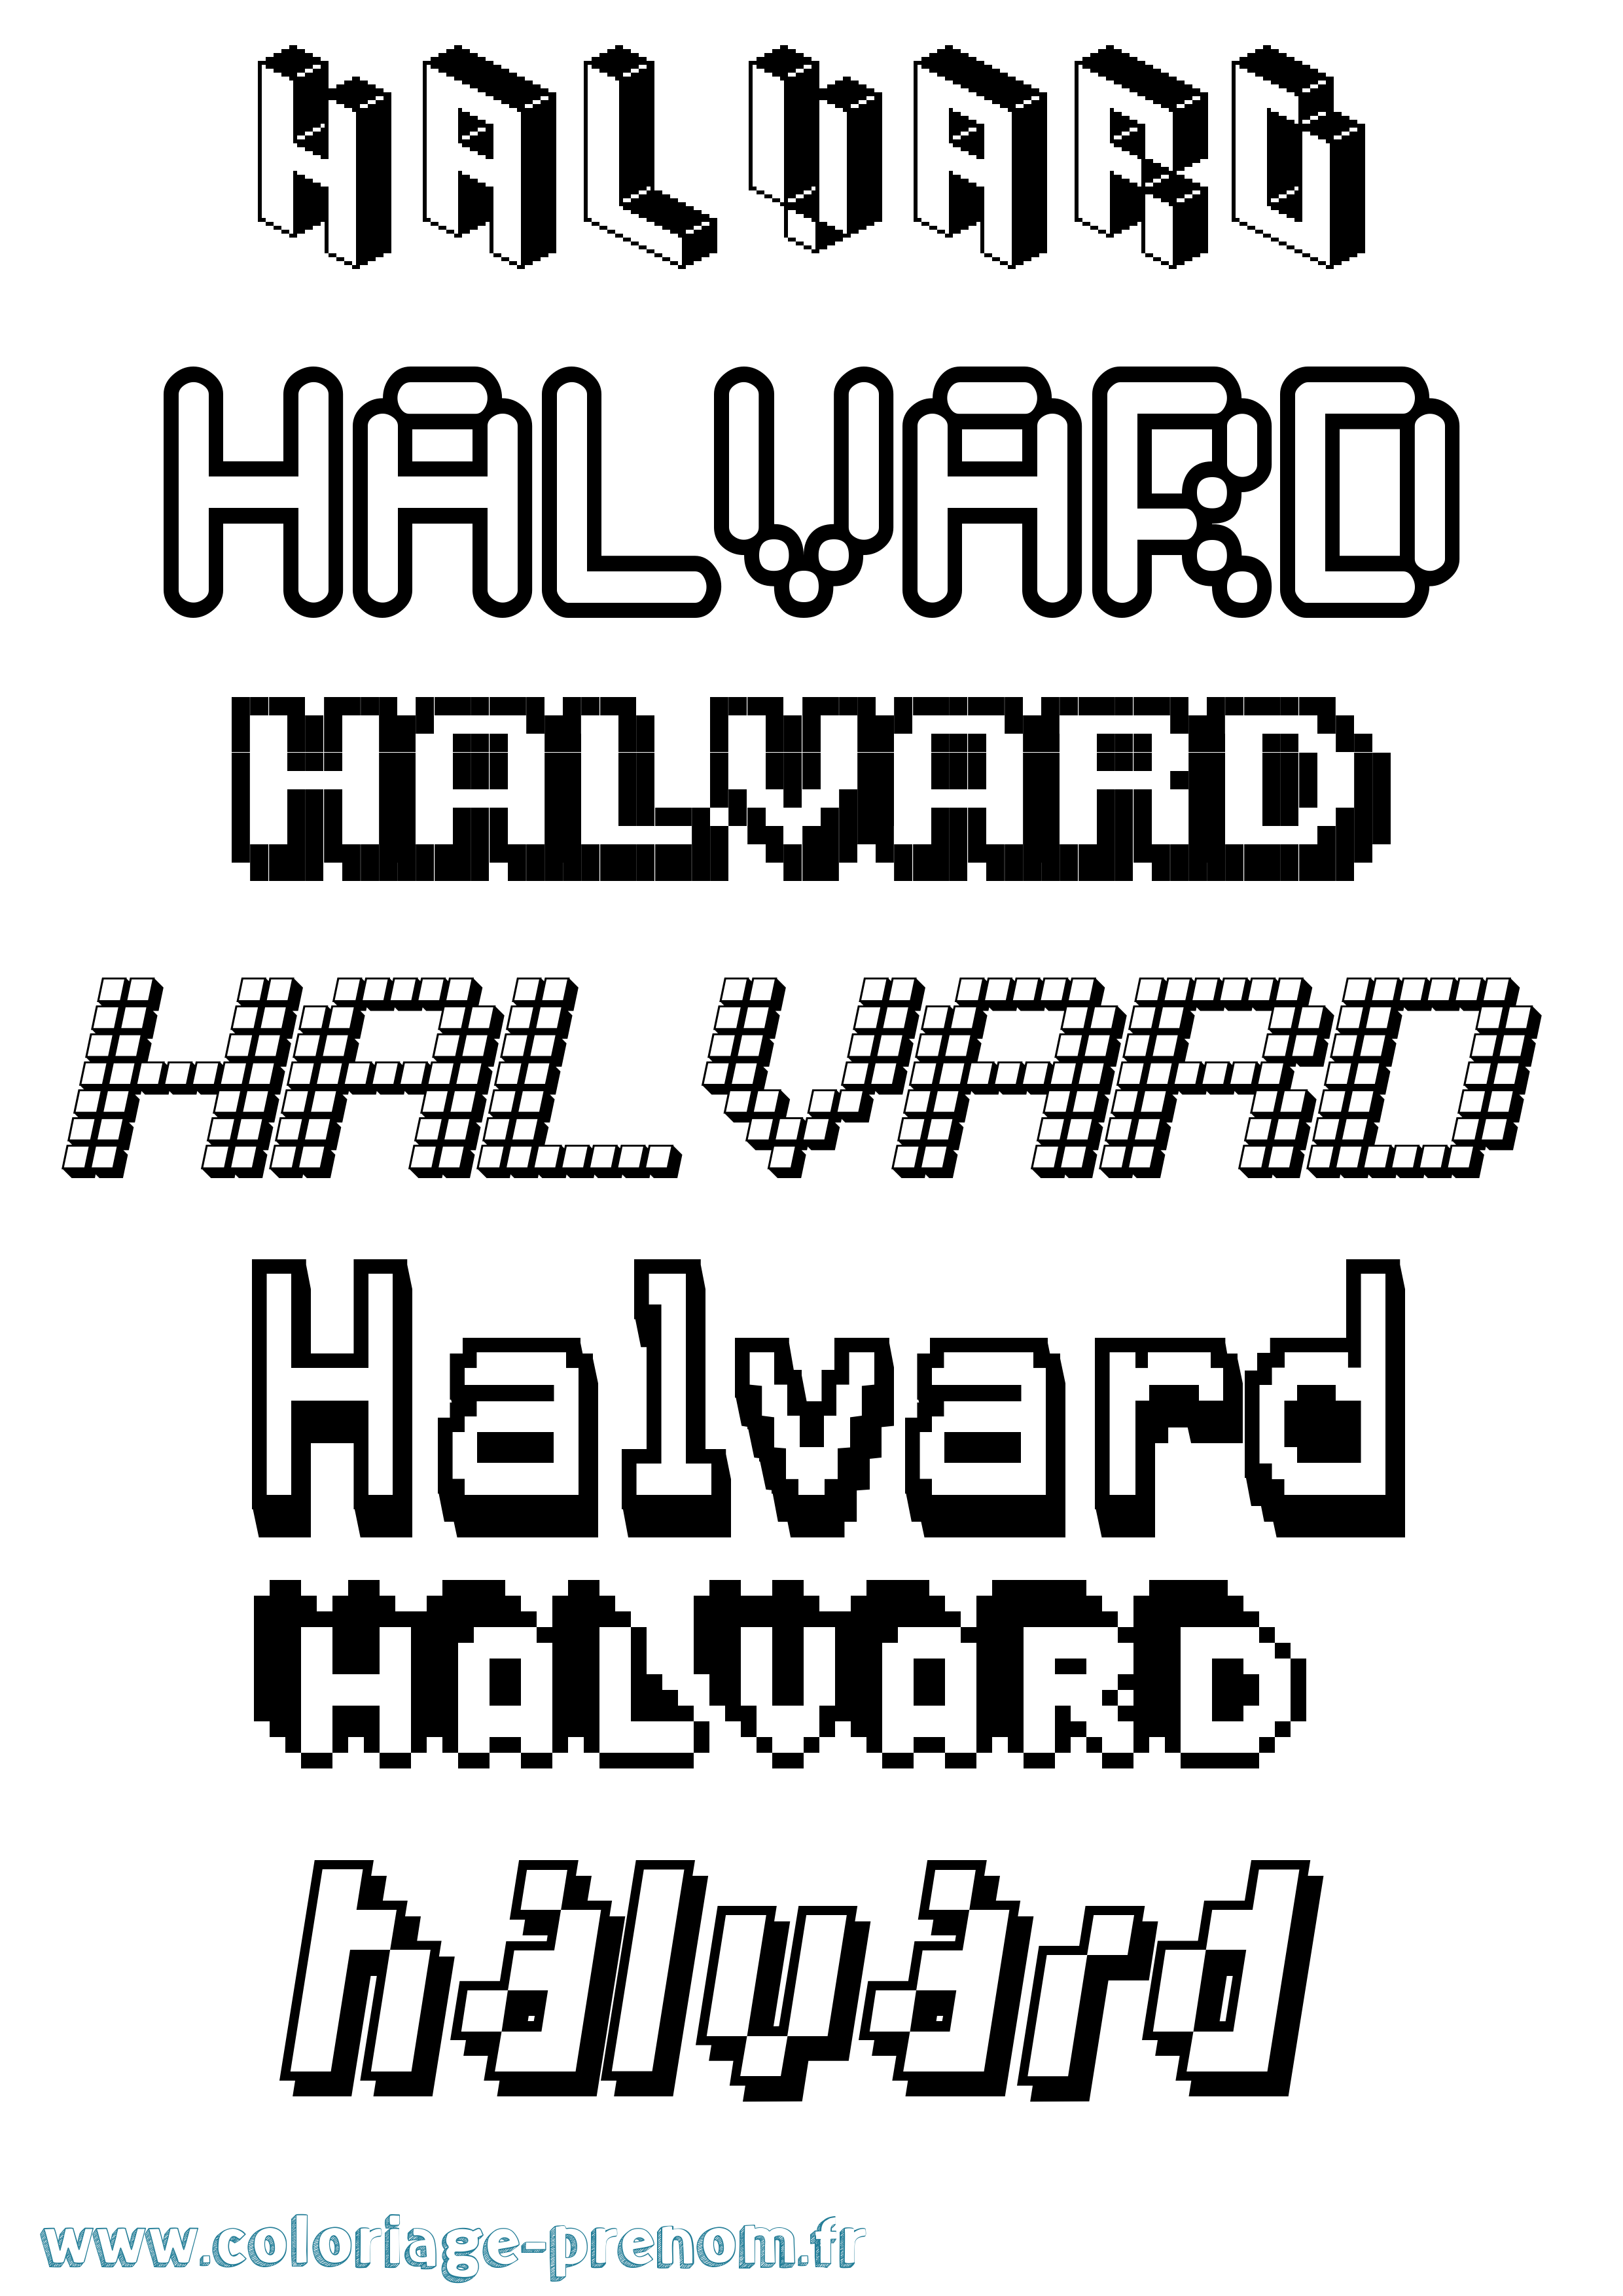 Coloriage prénom Halvard Pixel